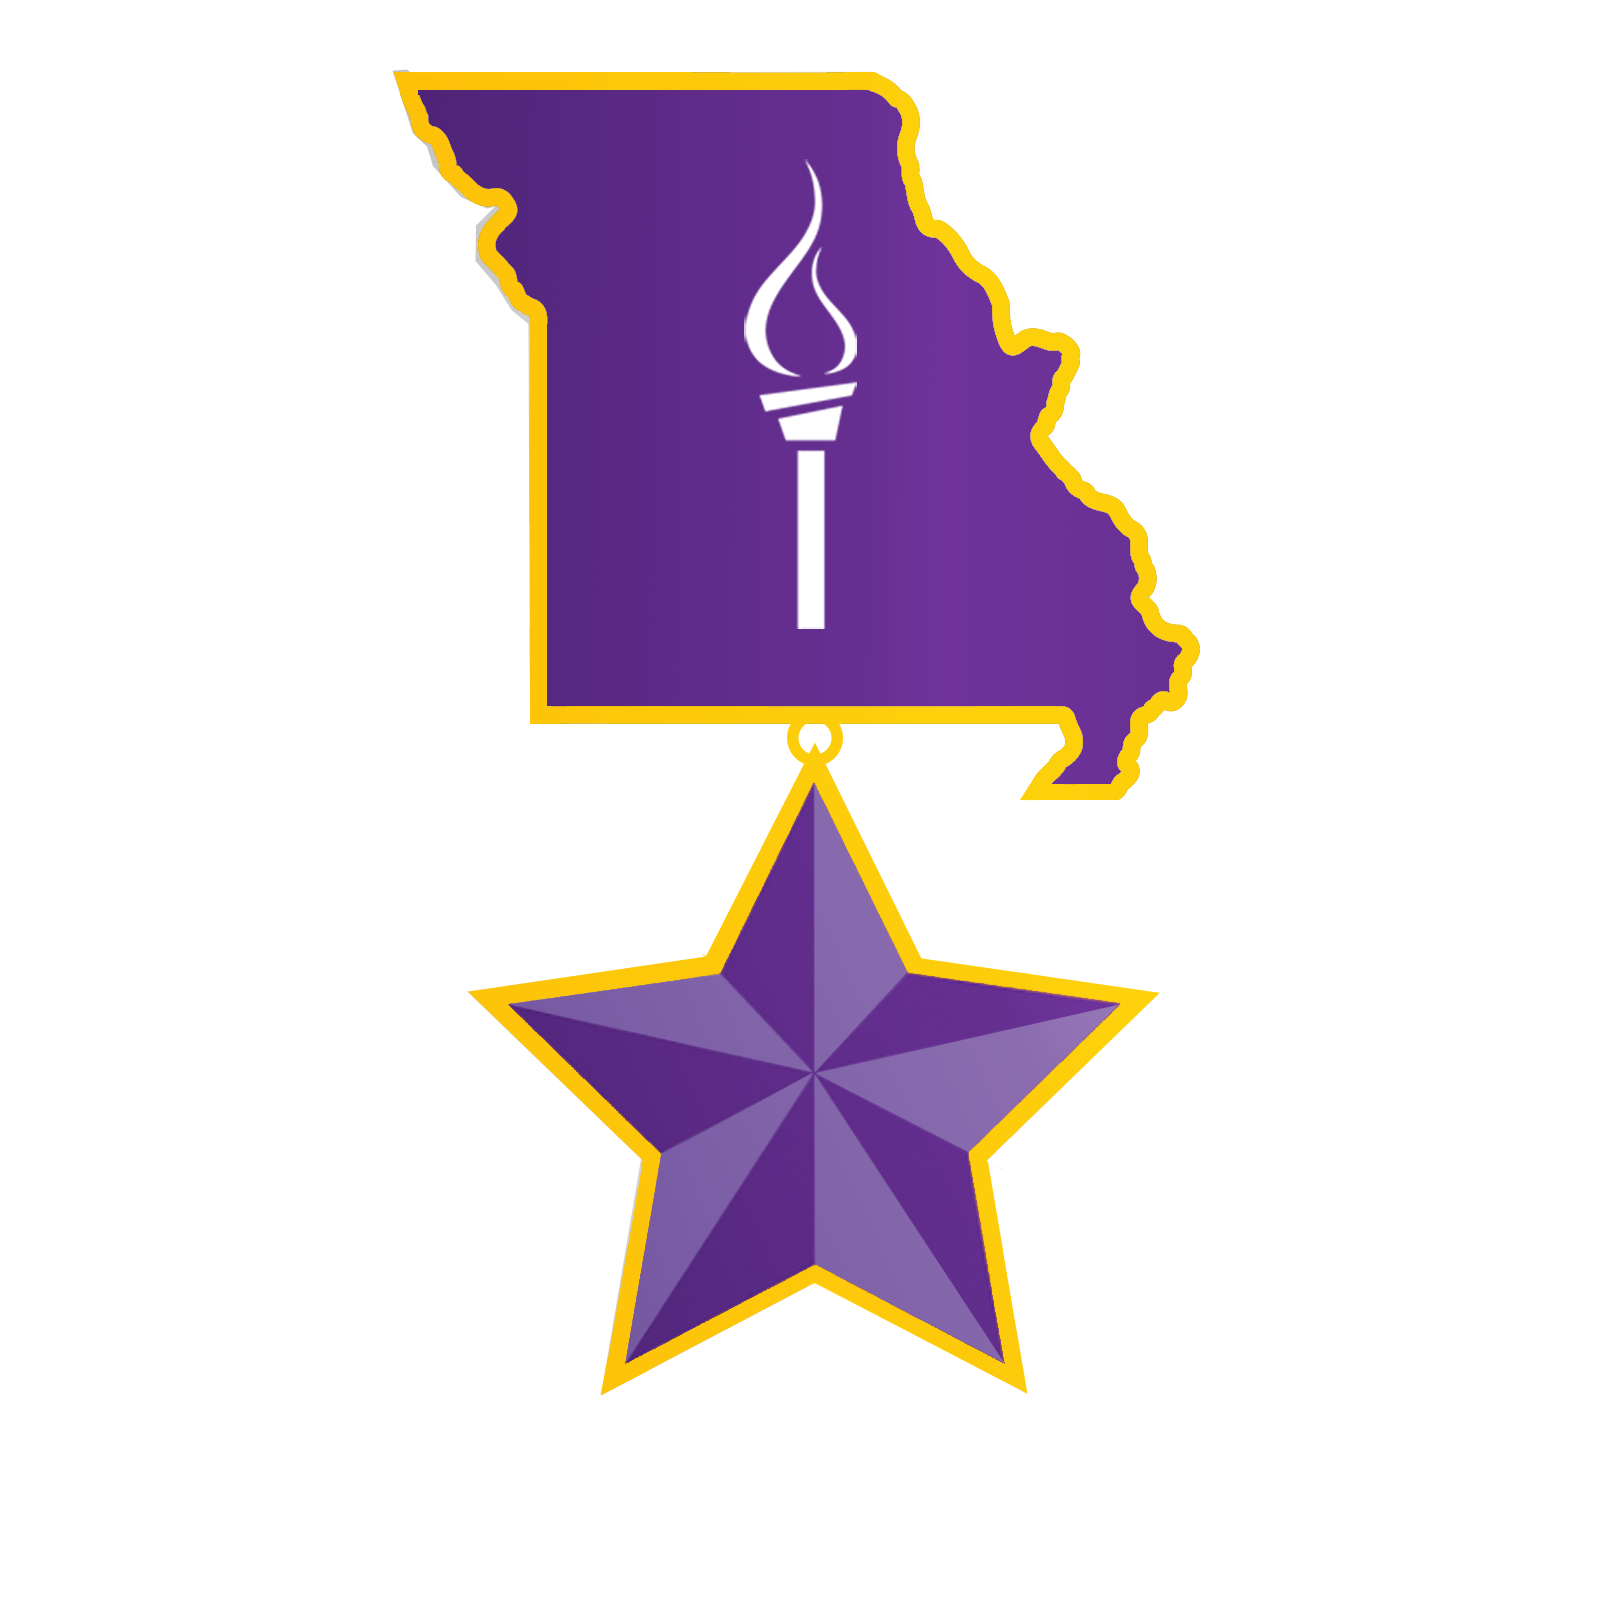 Shape of  Missouri with a purple star below